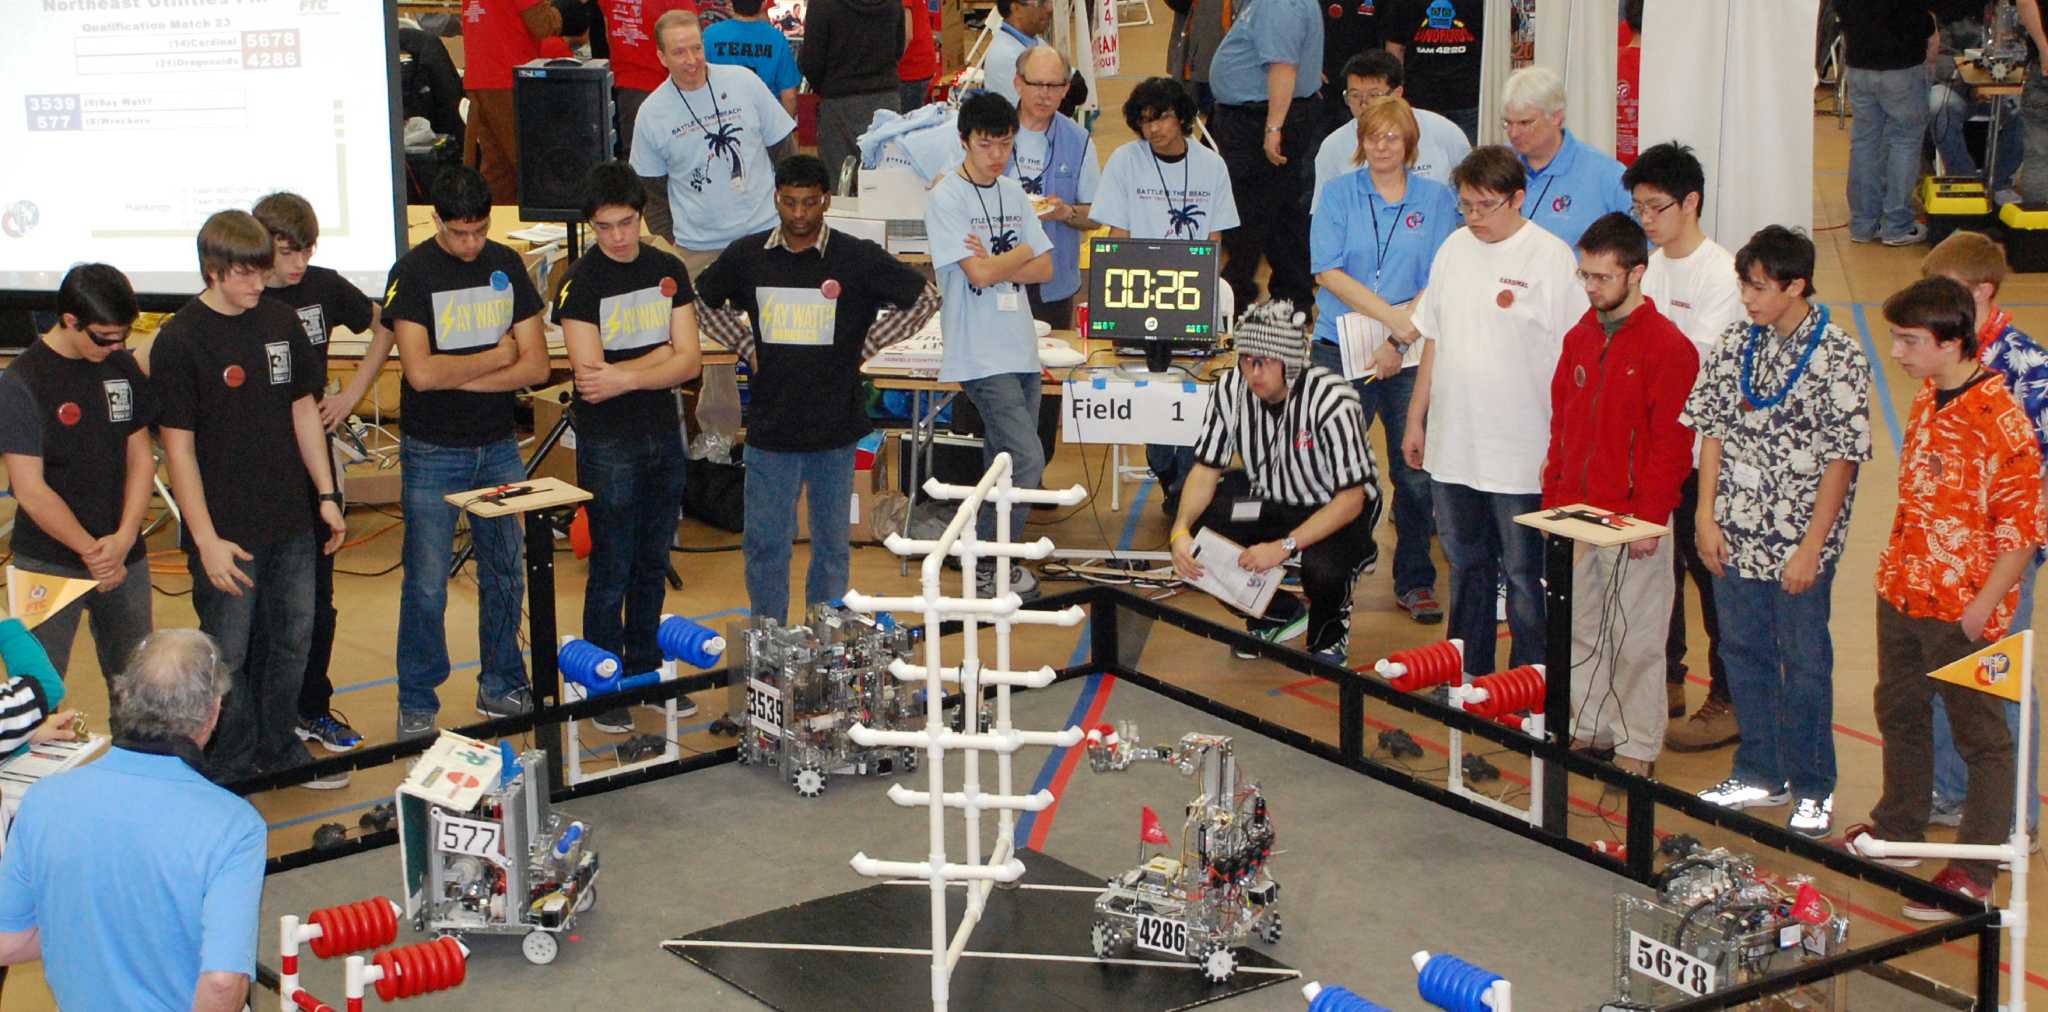 Wreckers team scores robotics tourney victory